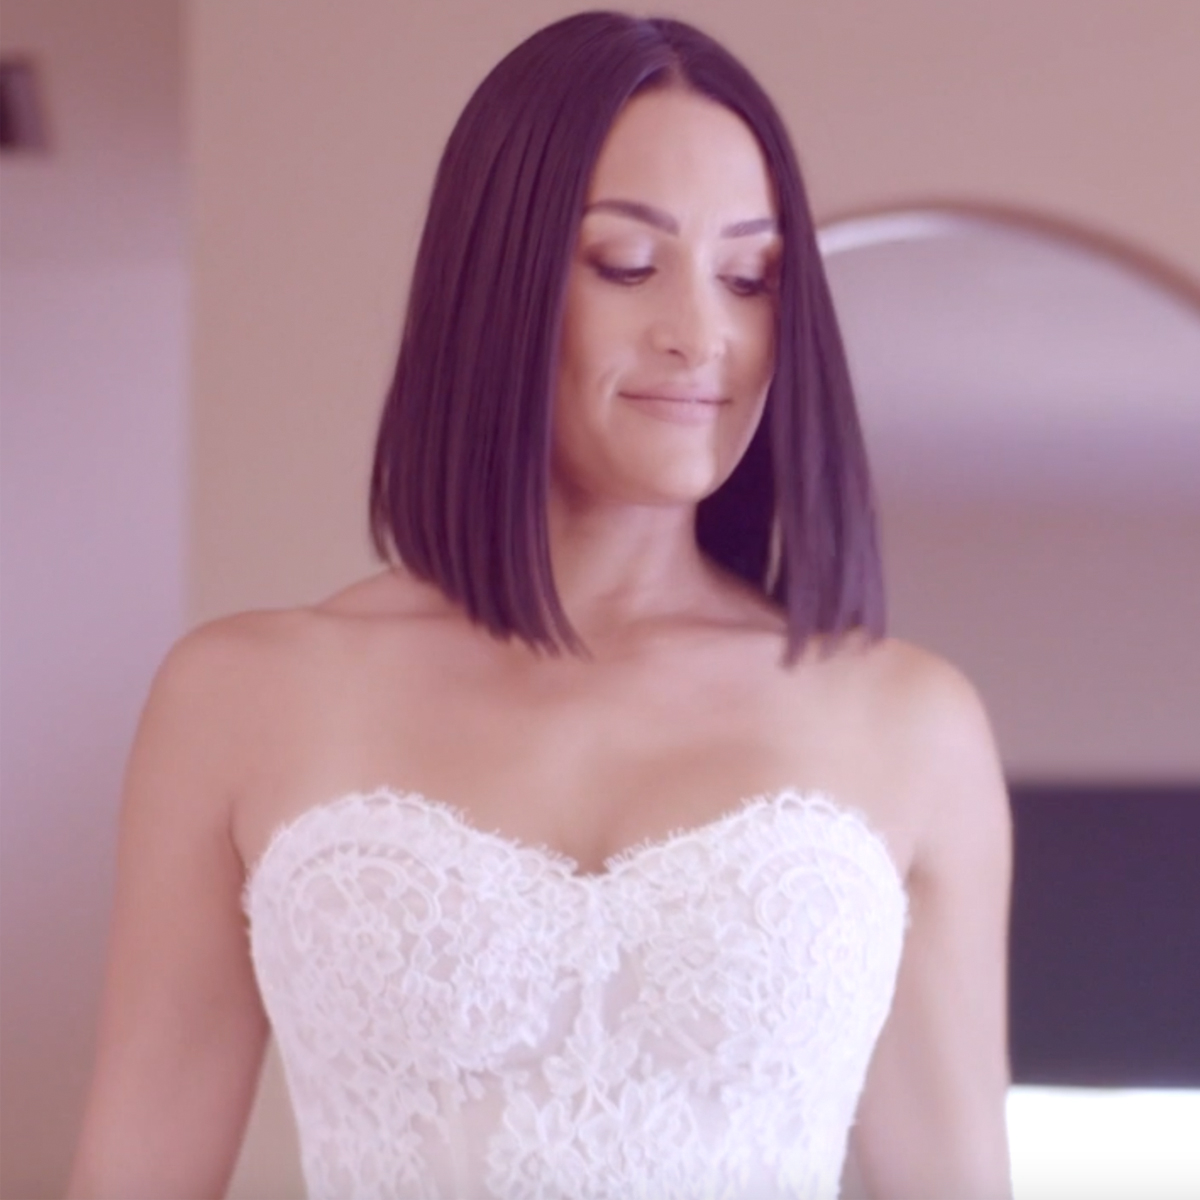 Nikki Bella wears white as she weds fiancé Artem Chigvintsev in